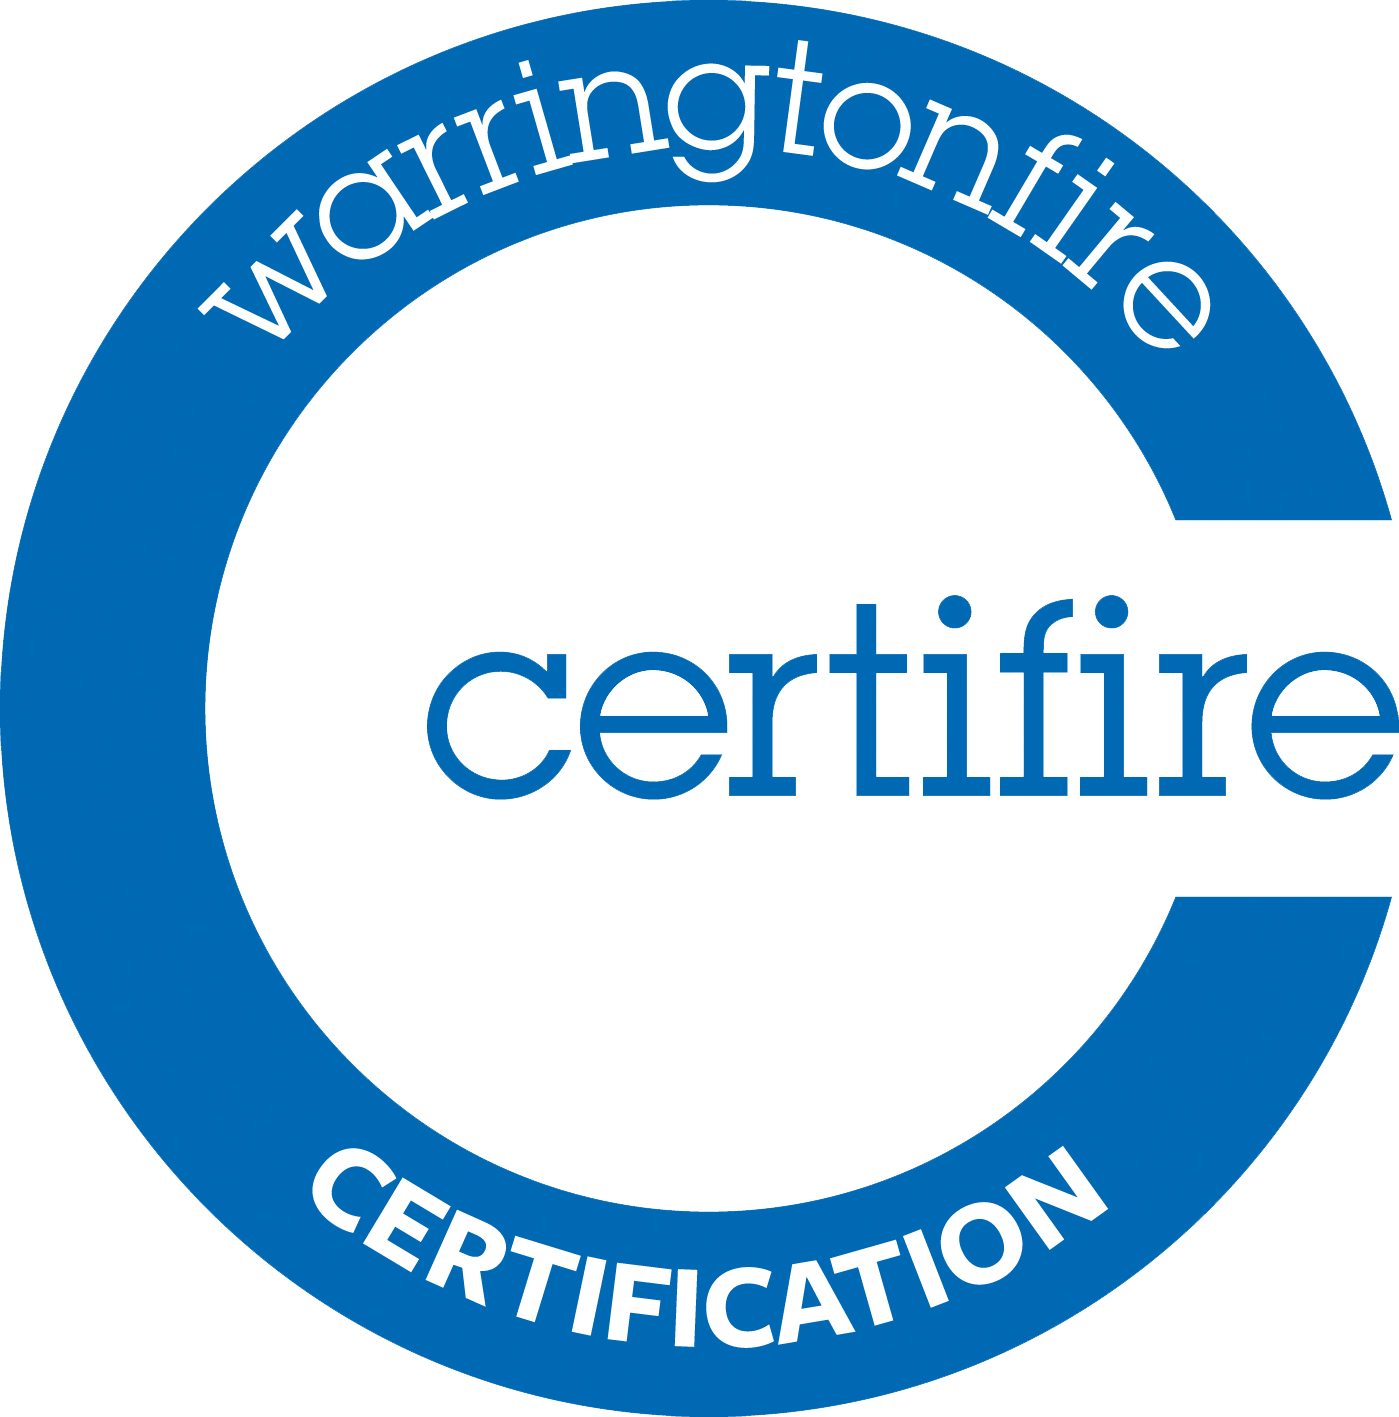 Warrington Certificate